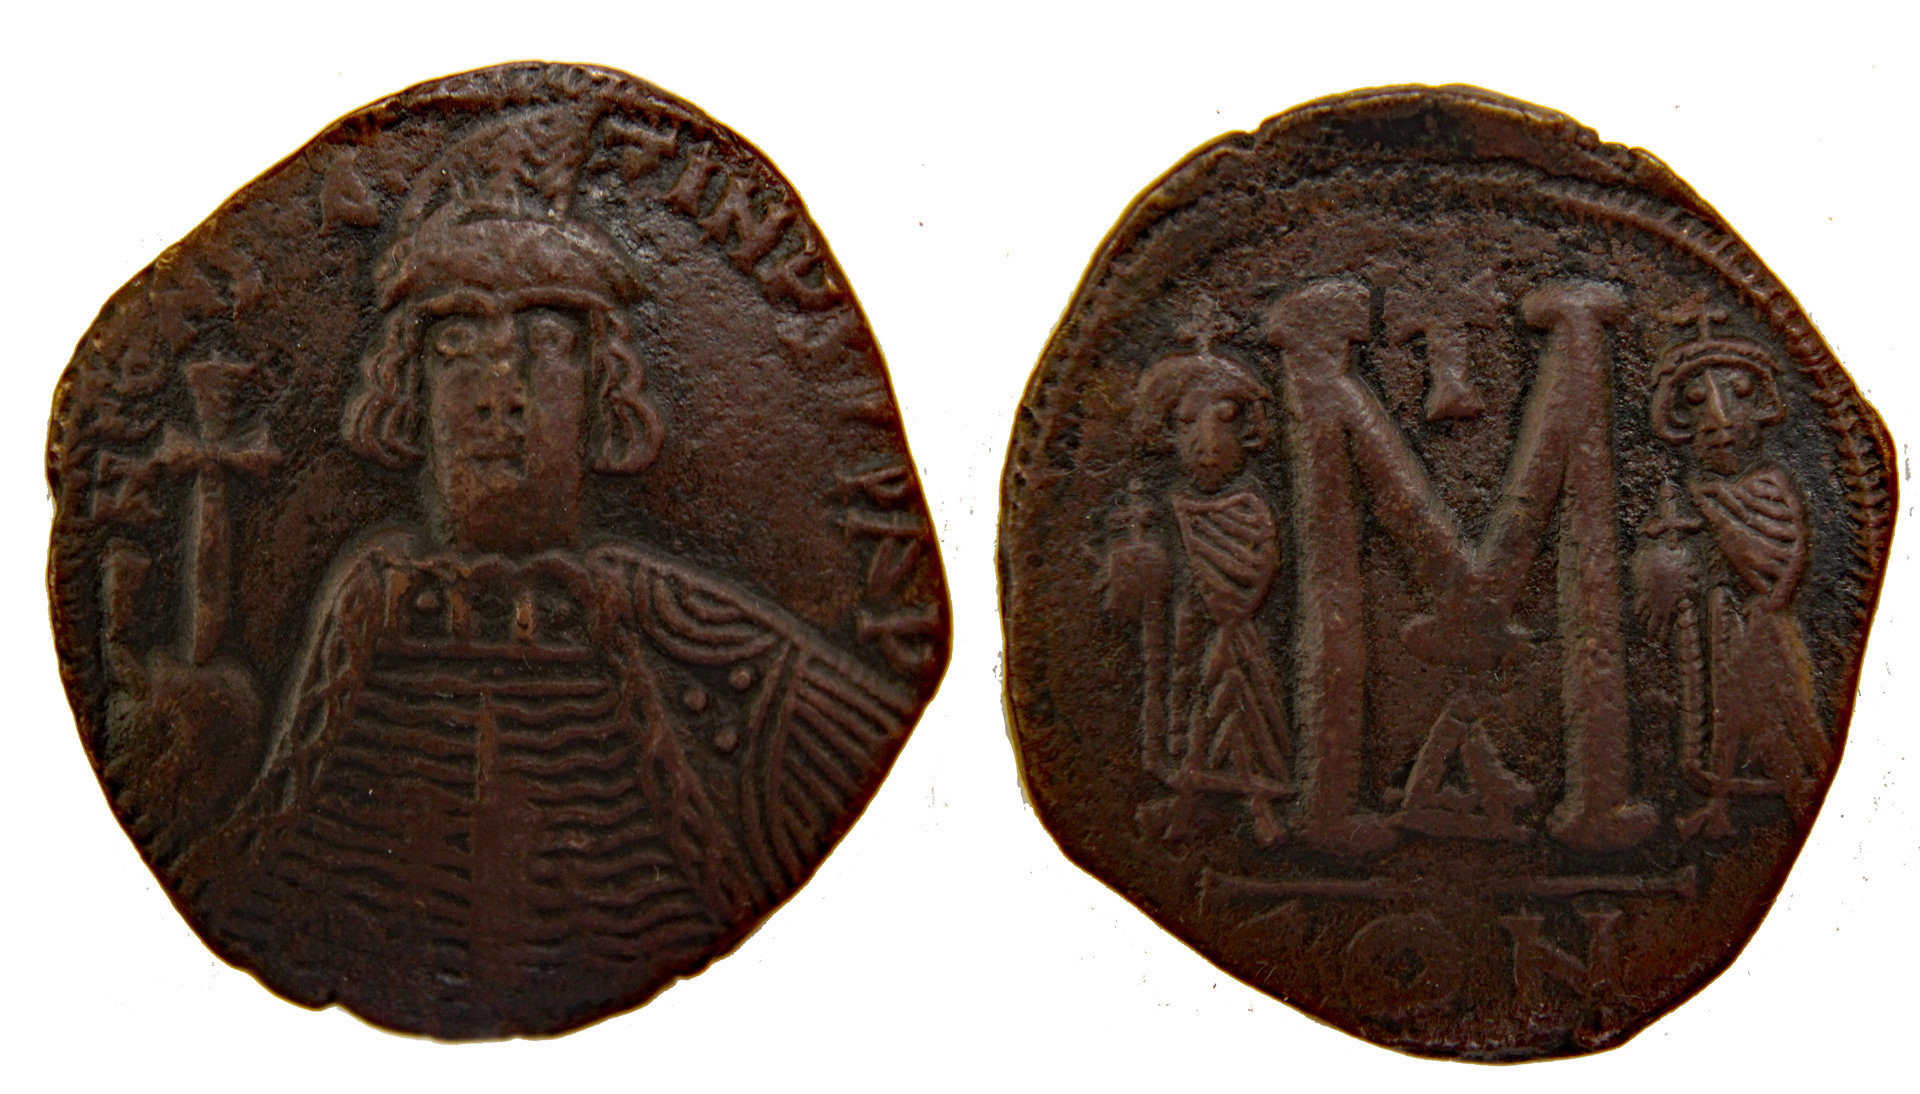 D-Camera Constantine IV Follis, 668-685 AD, 16.41 grams, Berk purchase  6-6-20.jpg